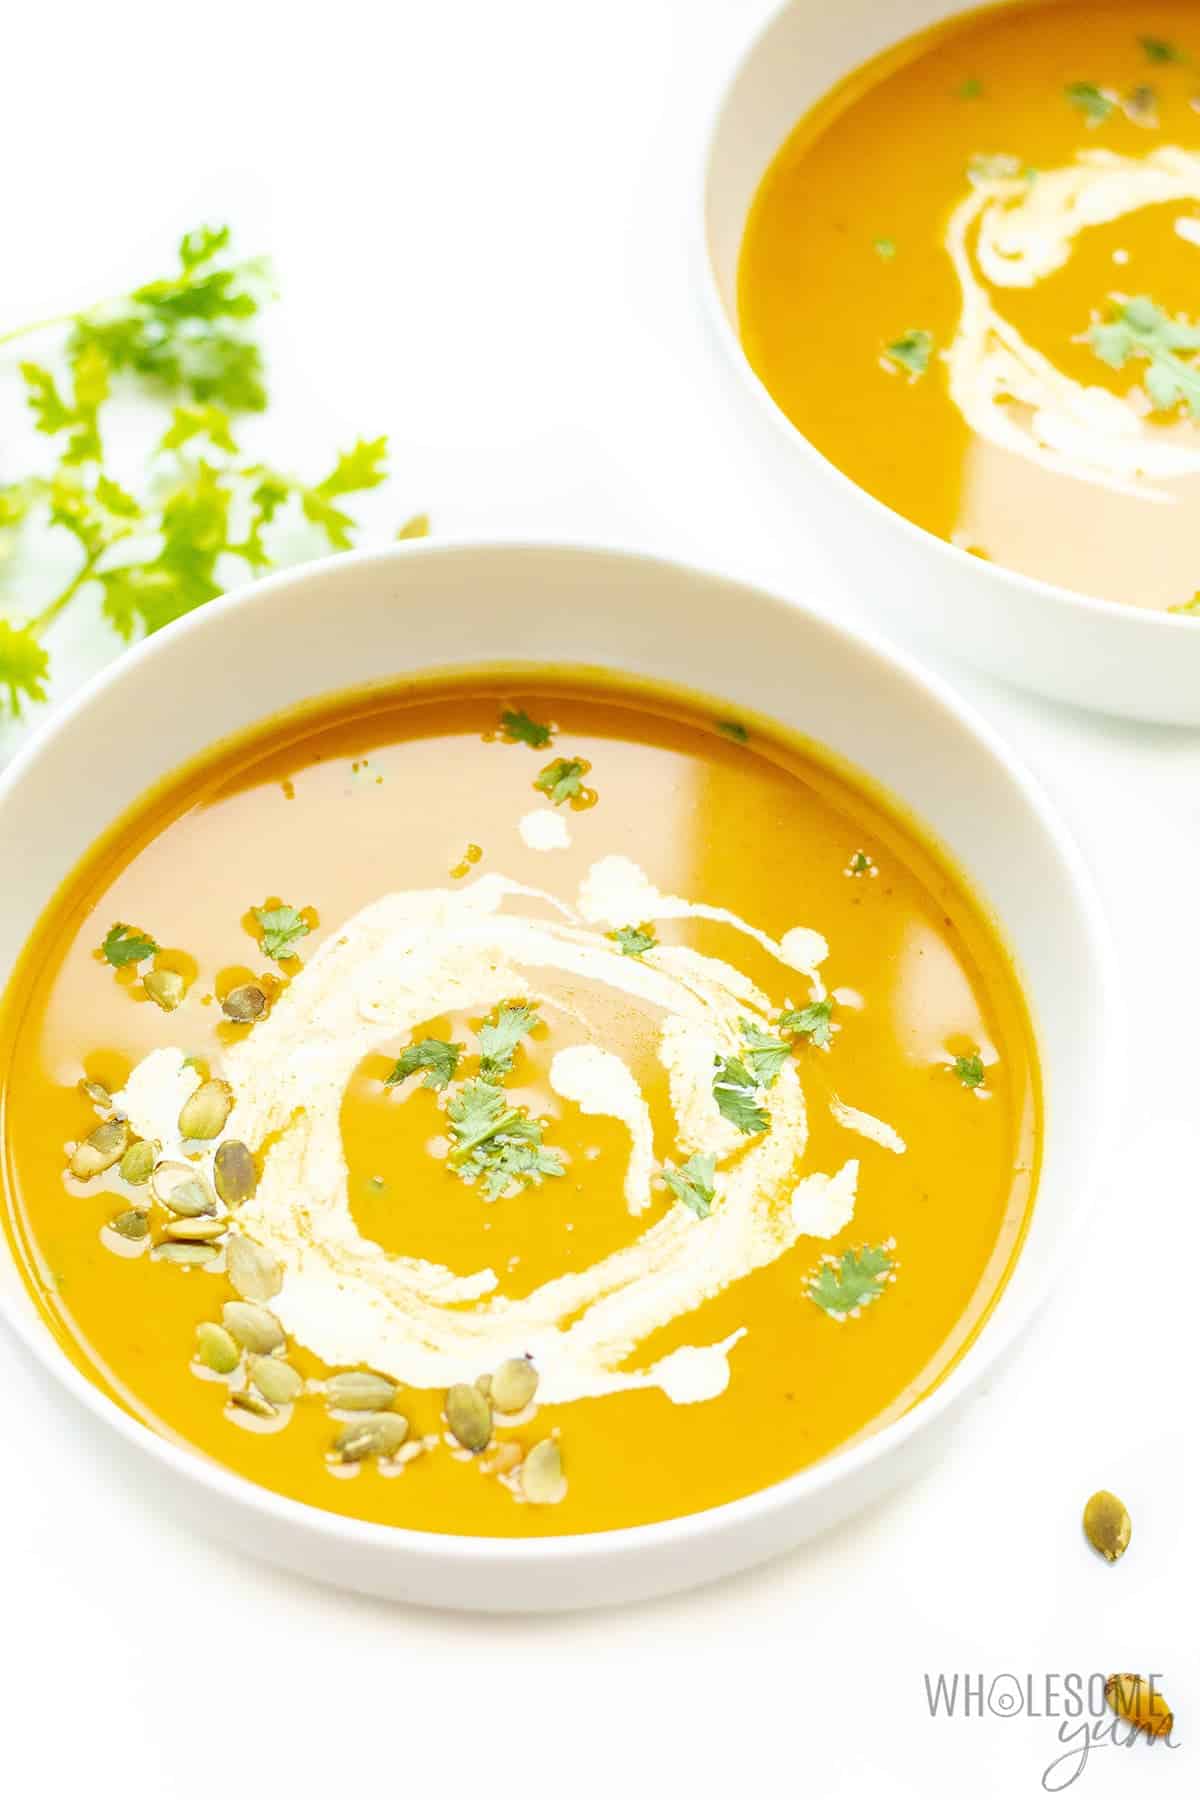 Bowls of creamy pumpkin soup with garnish